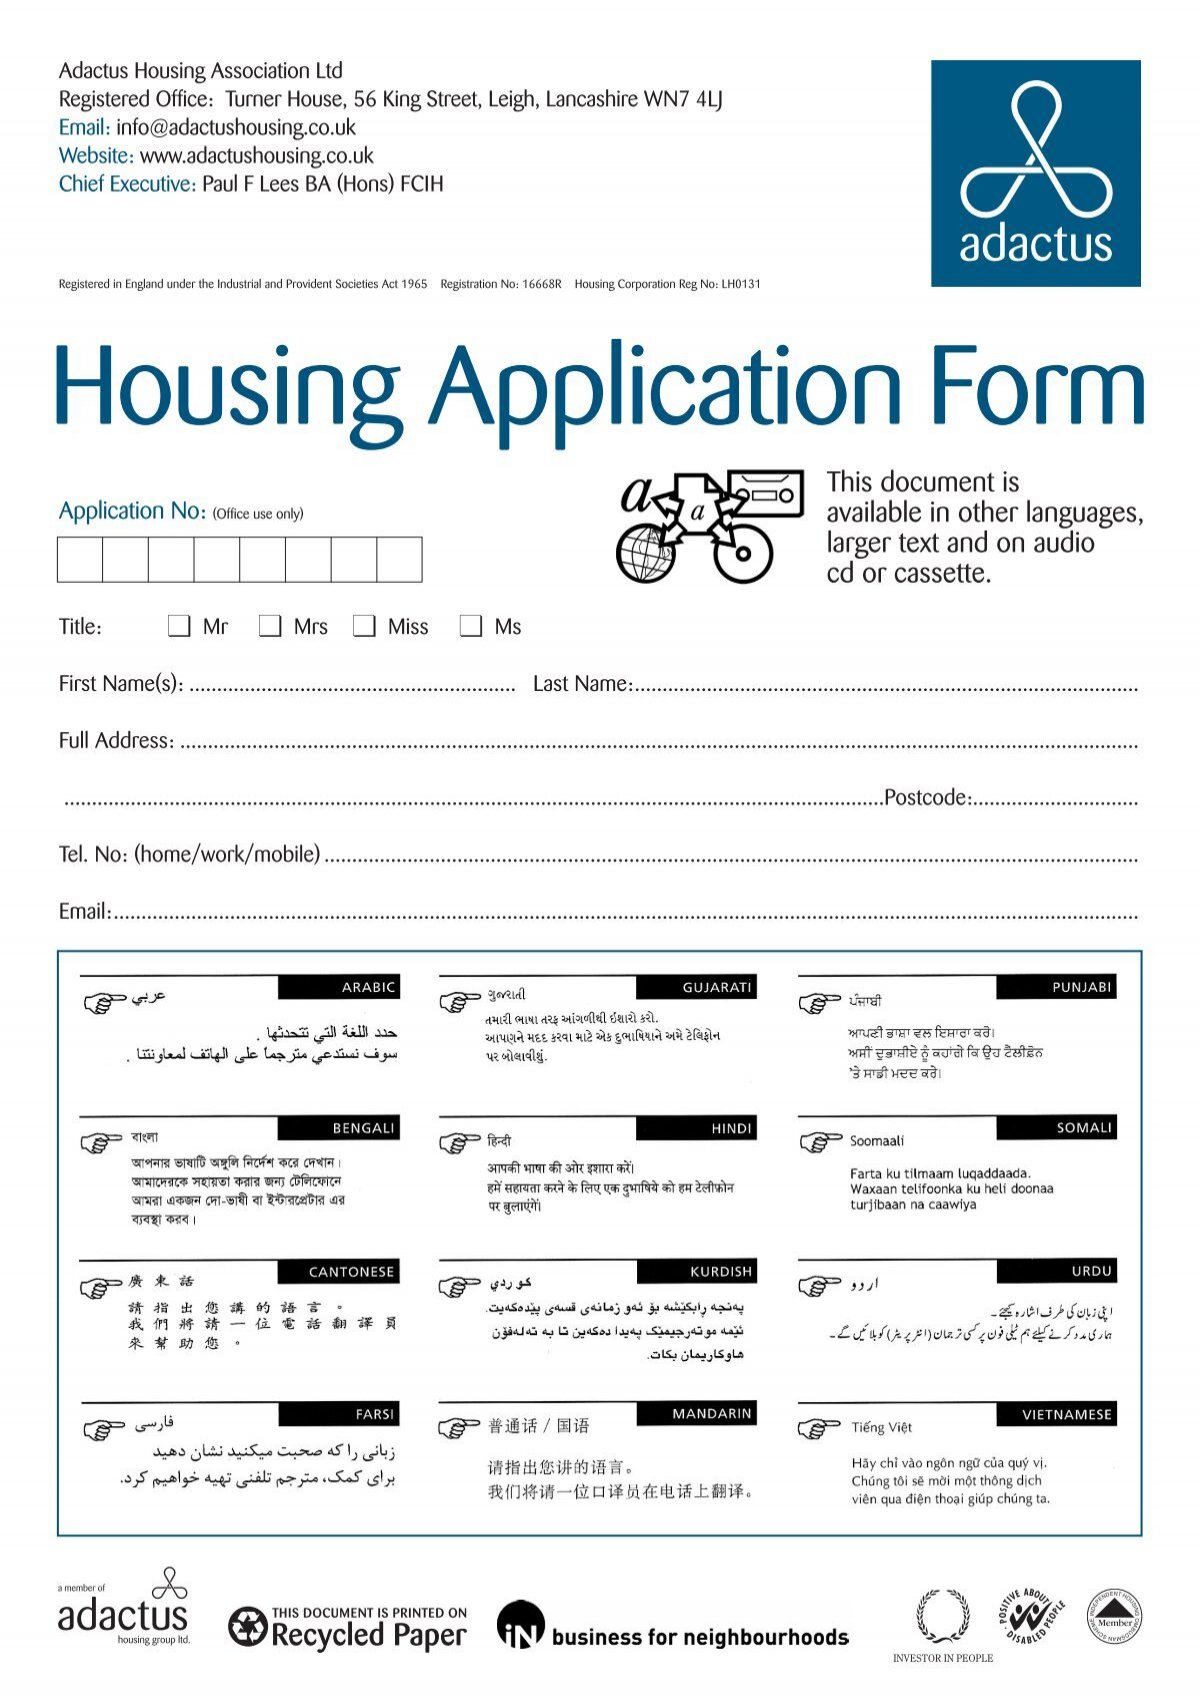 housing-application-form-adactus-housing-group-ltd